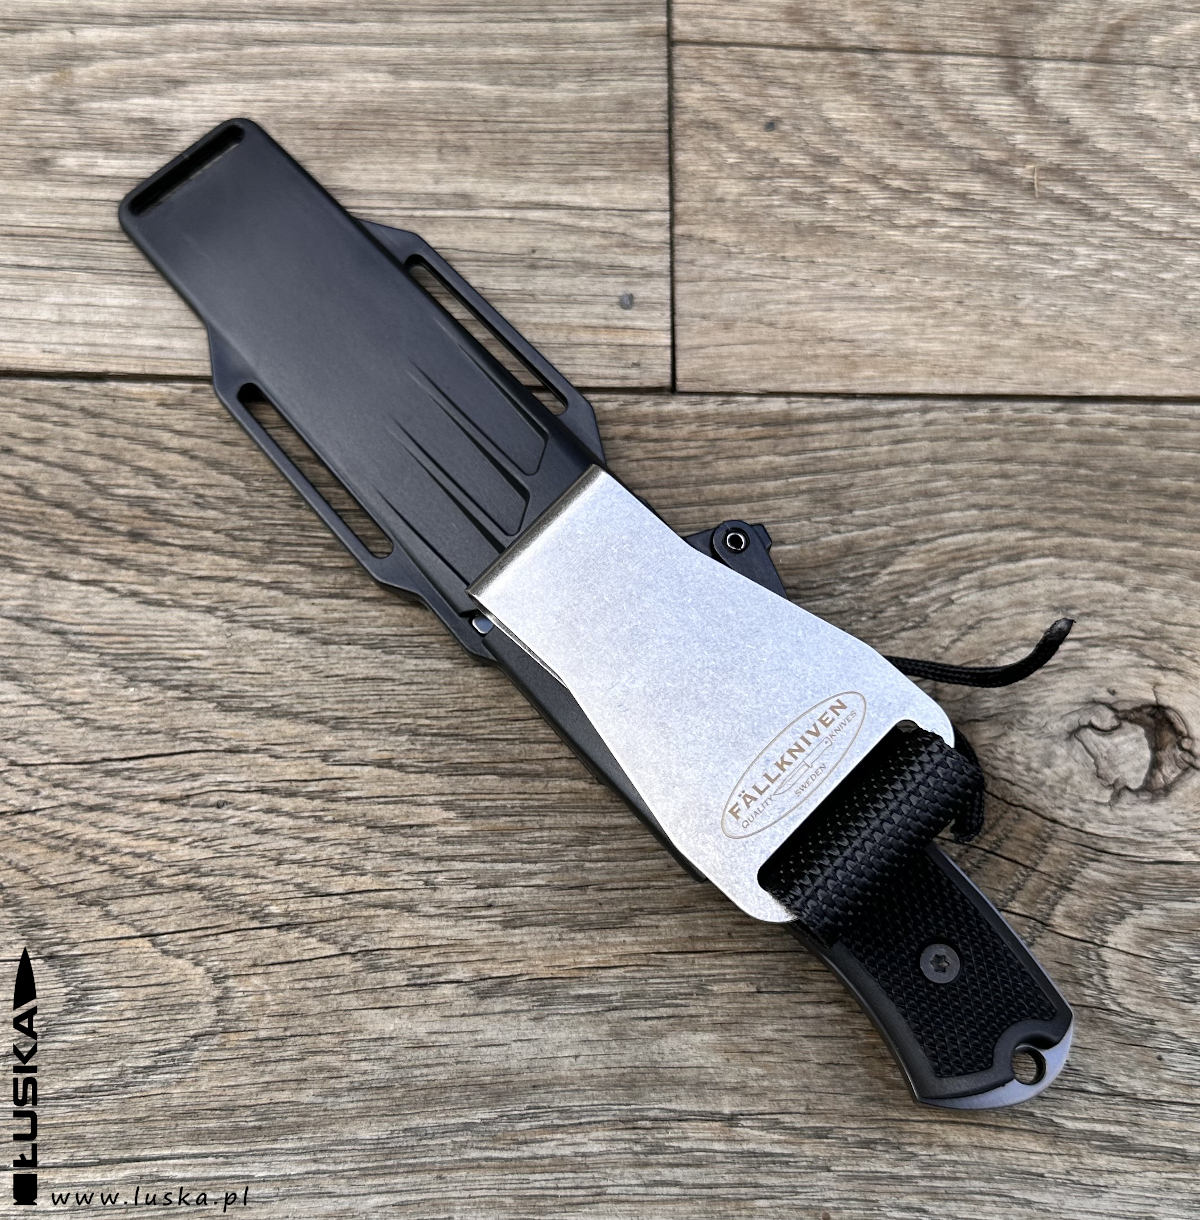 Nóż Fallkniven F1xb Tungsten Carbide (czarne ostrze), etui: zytel clips